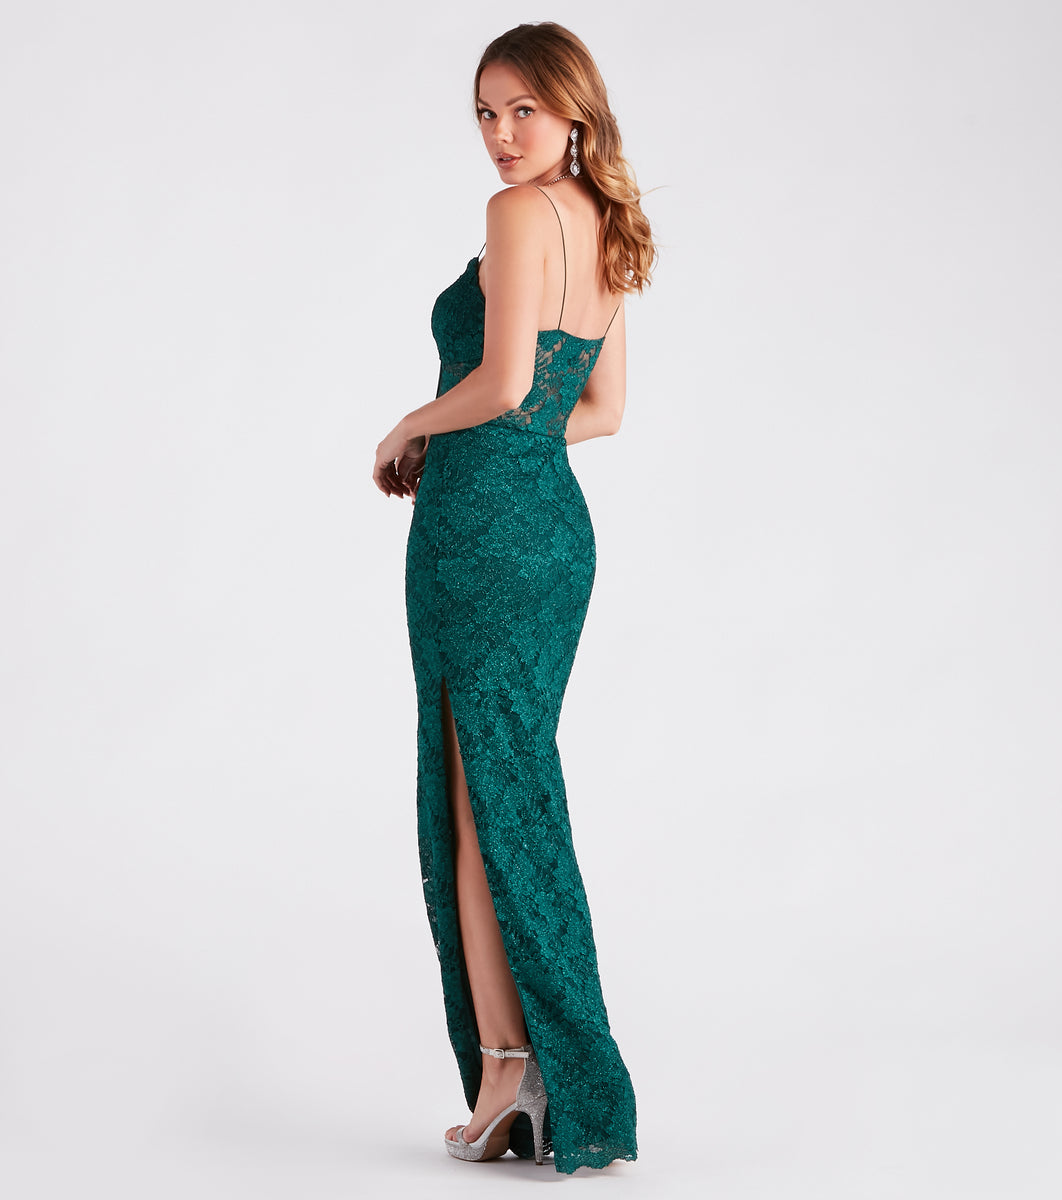 Adelaide Formal Glitter Lace Slit Long Dress & Windsor